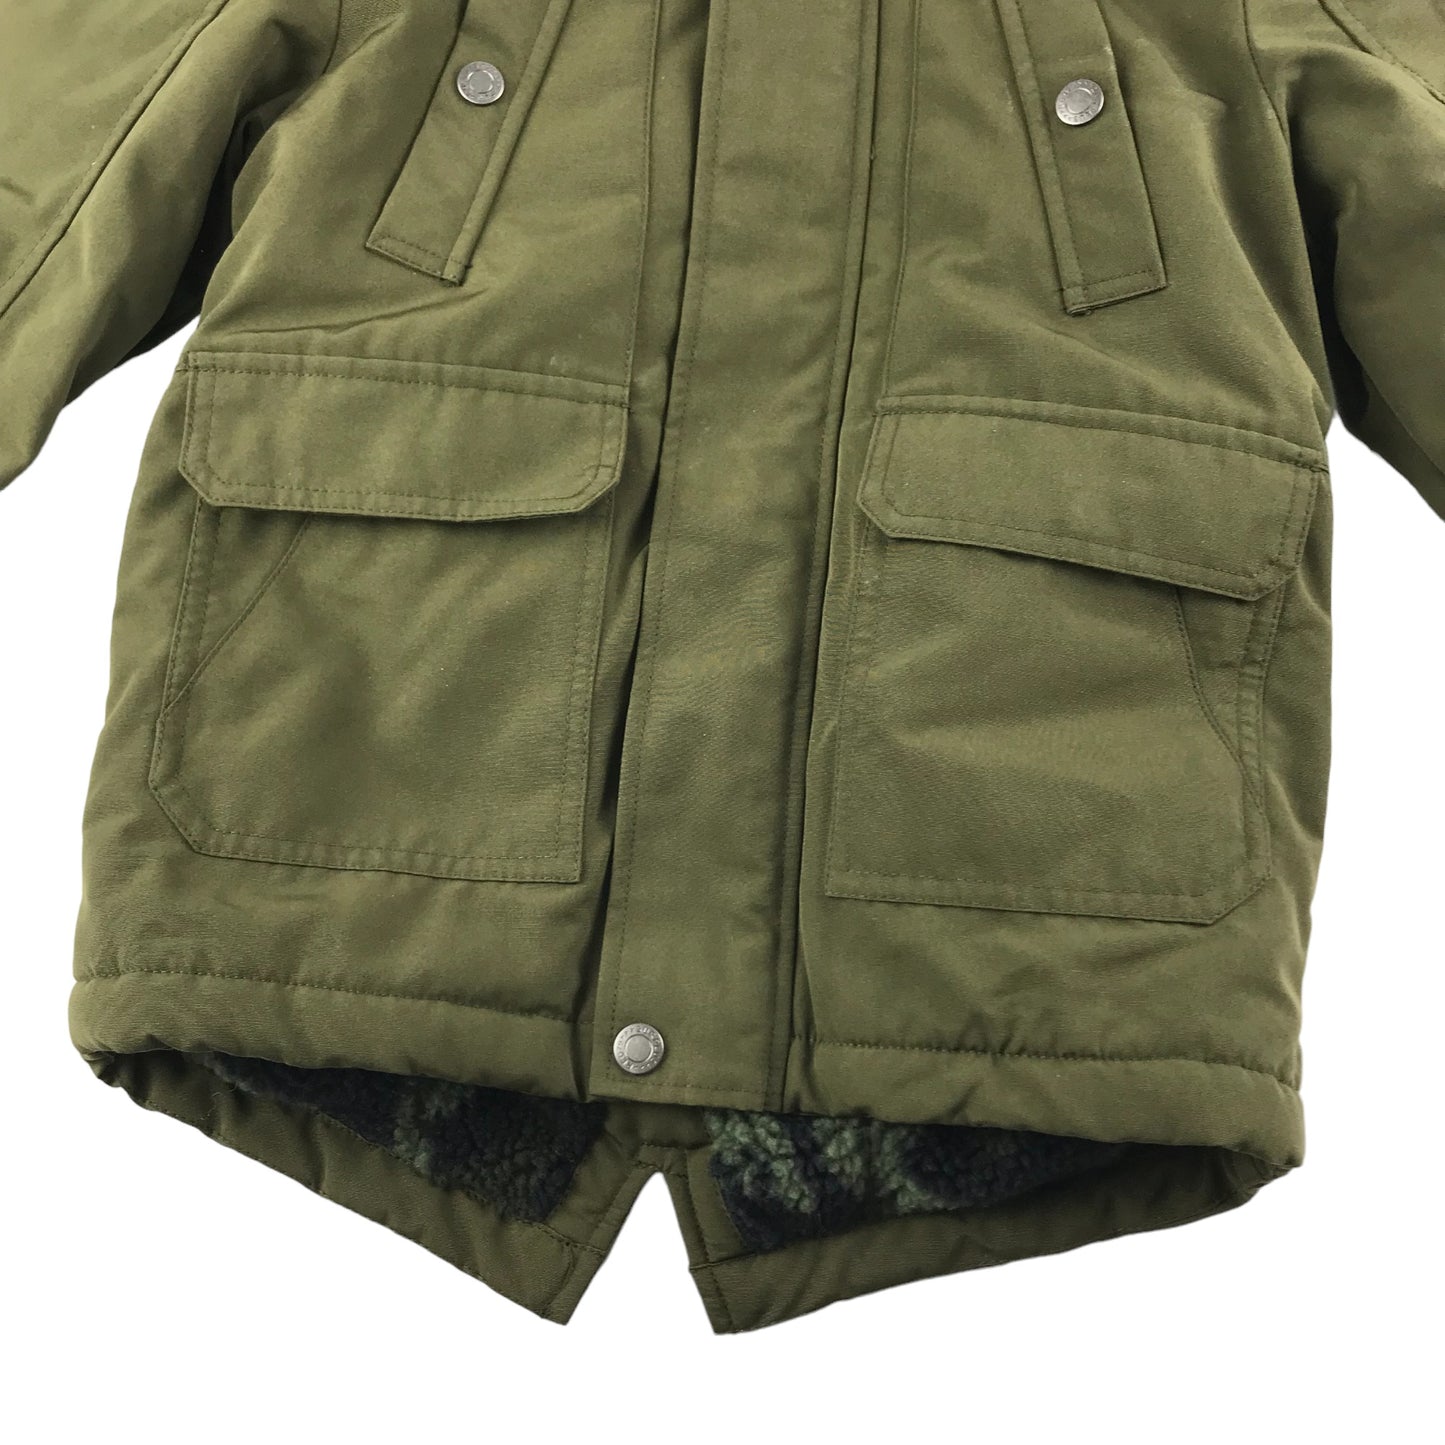 George Jacket Age 6 Khaki Green Parka with Faux Fur Hood